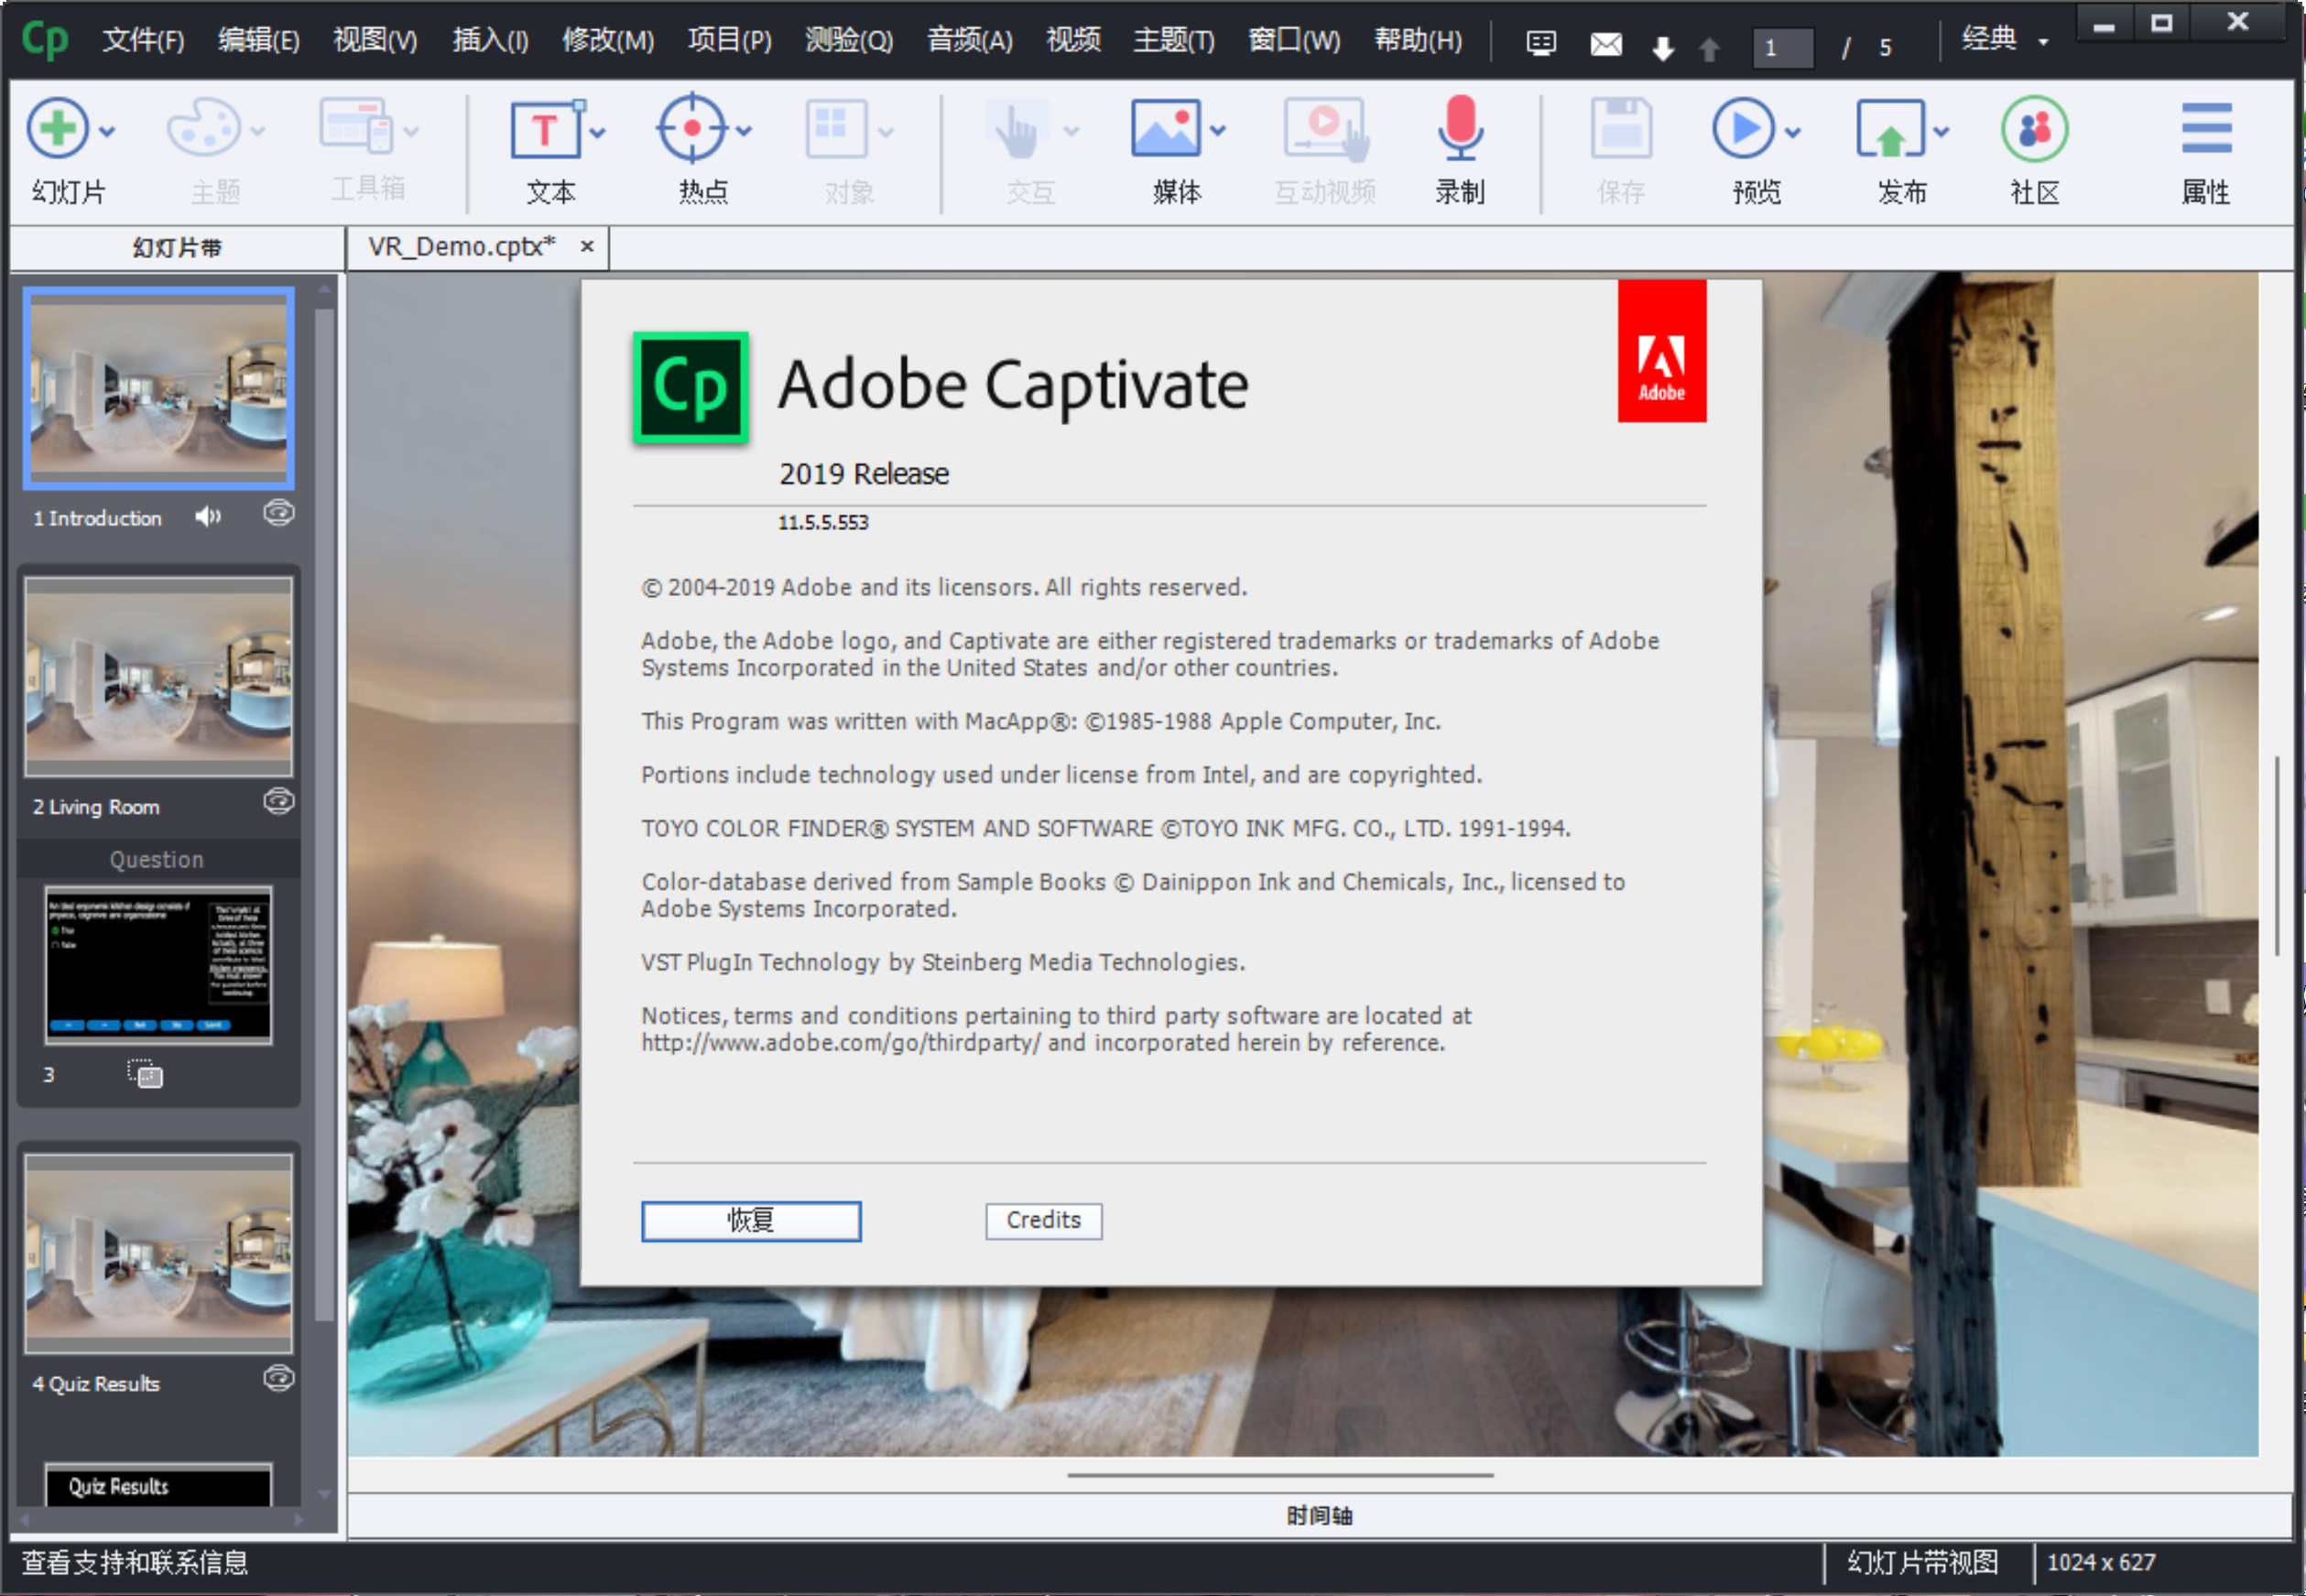 Adobe Captivate 2019(多媒体课程创建) v11.5.5.553 中文永久使用